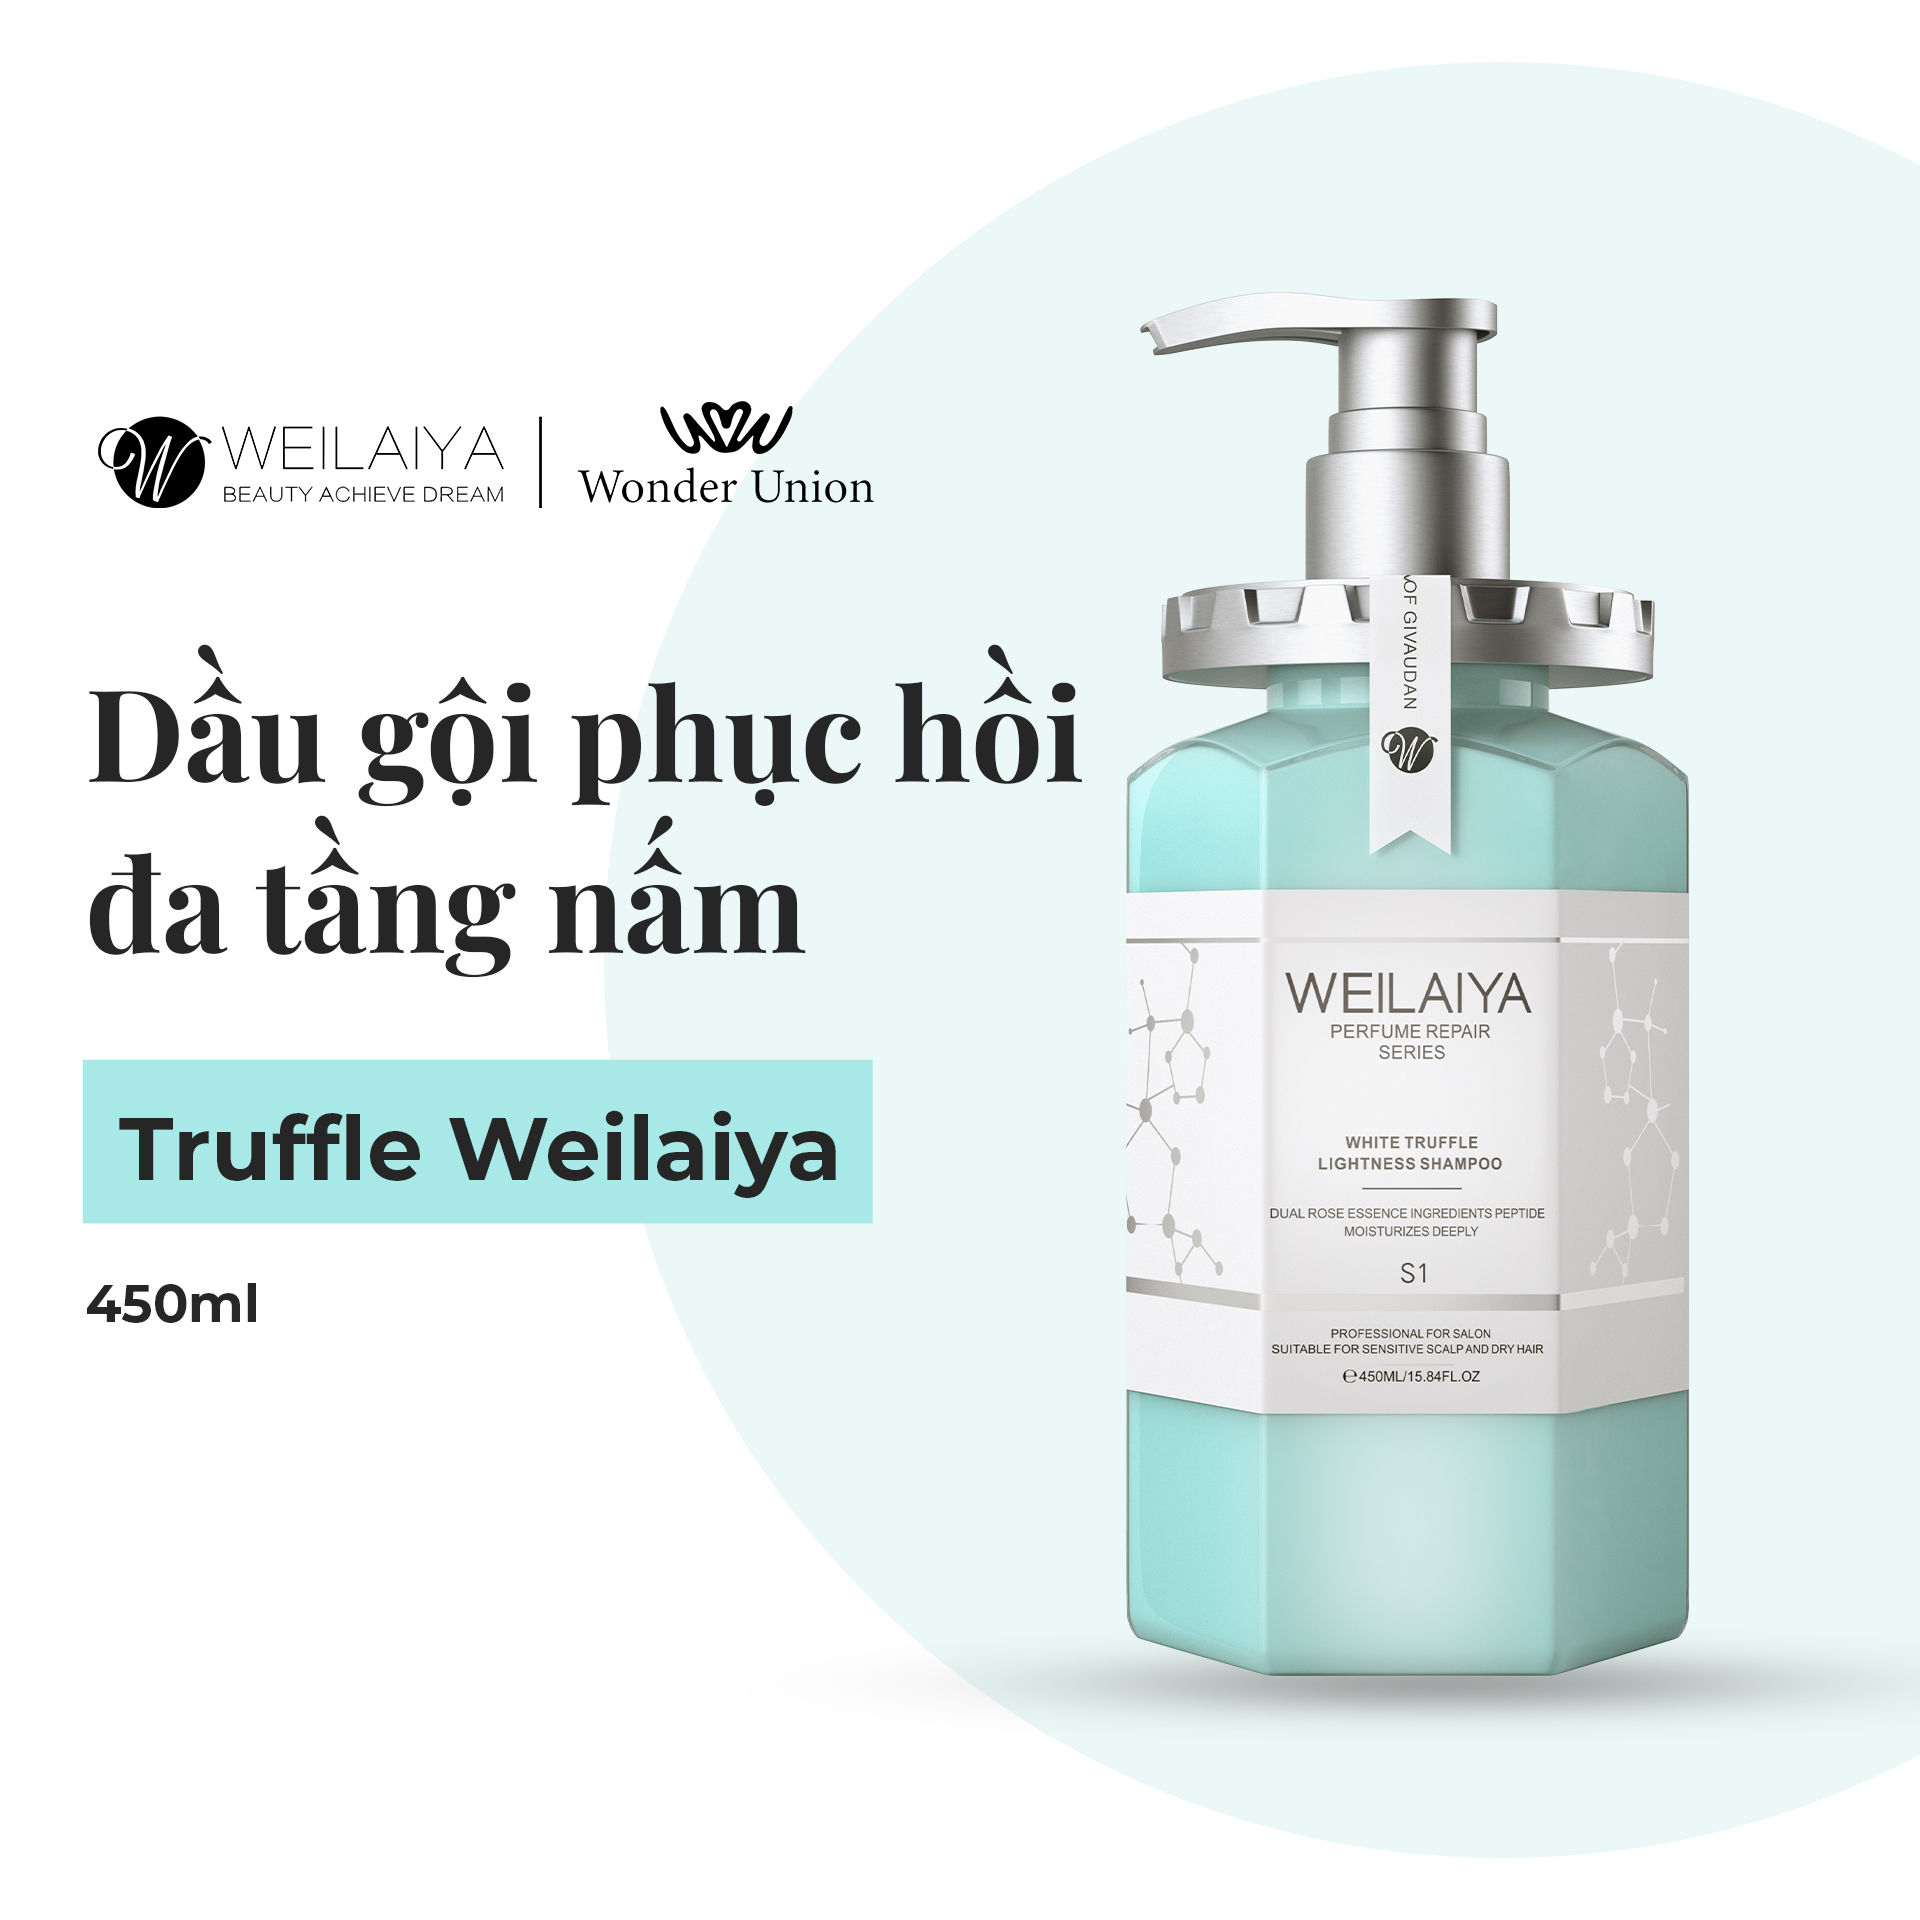 Dầu gội phục hồi đa tầng nấm truffle Weilaiya White Truffle Lightness Shampoo 450ml